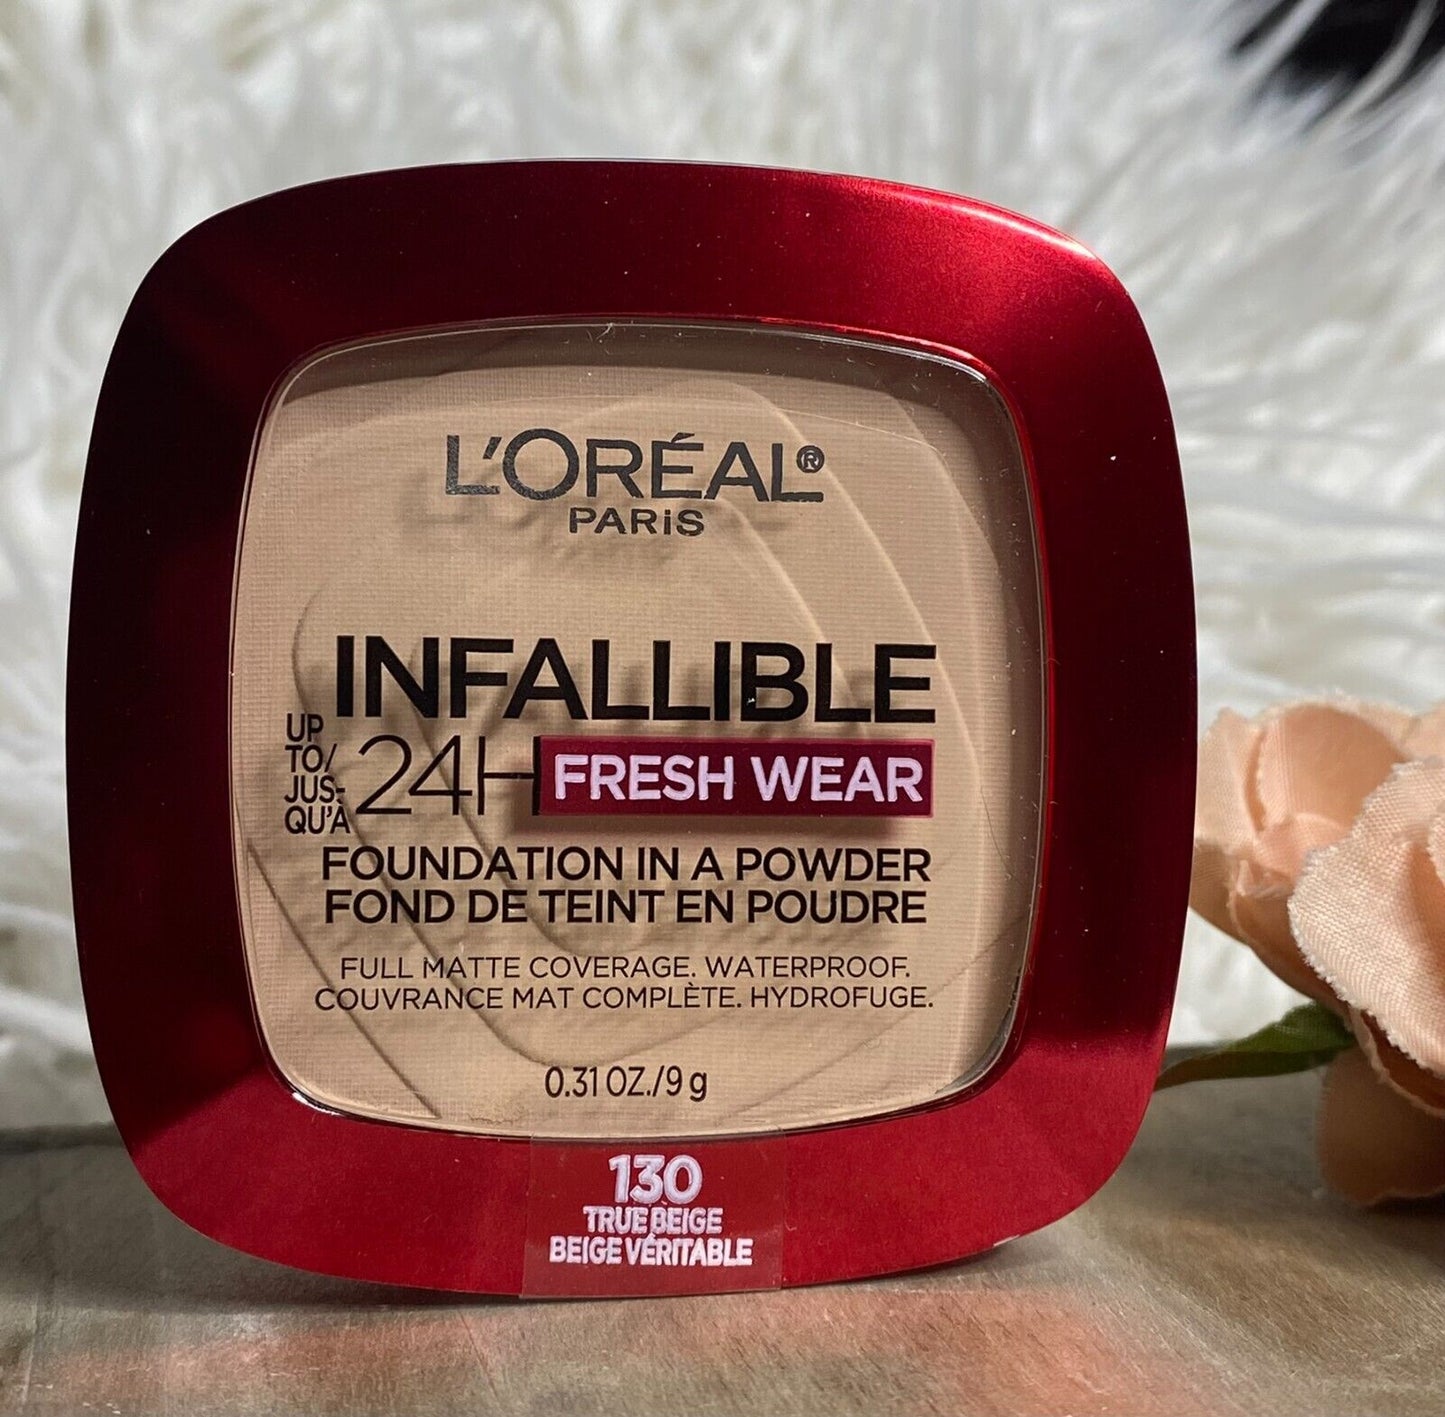 L'Oreal Infallible 24H Freshwear Face Powder - 130 True Beige